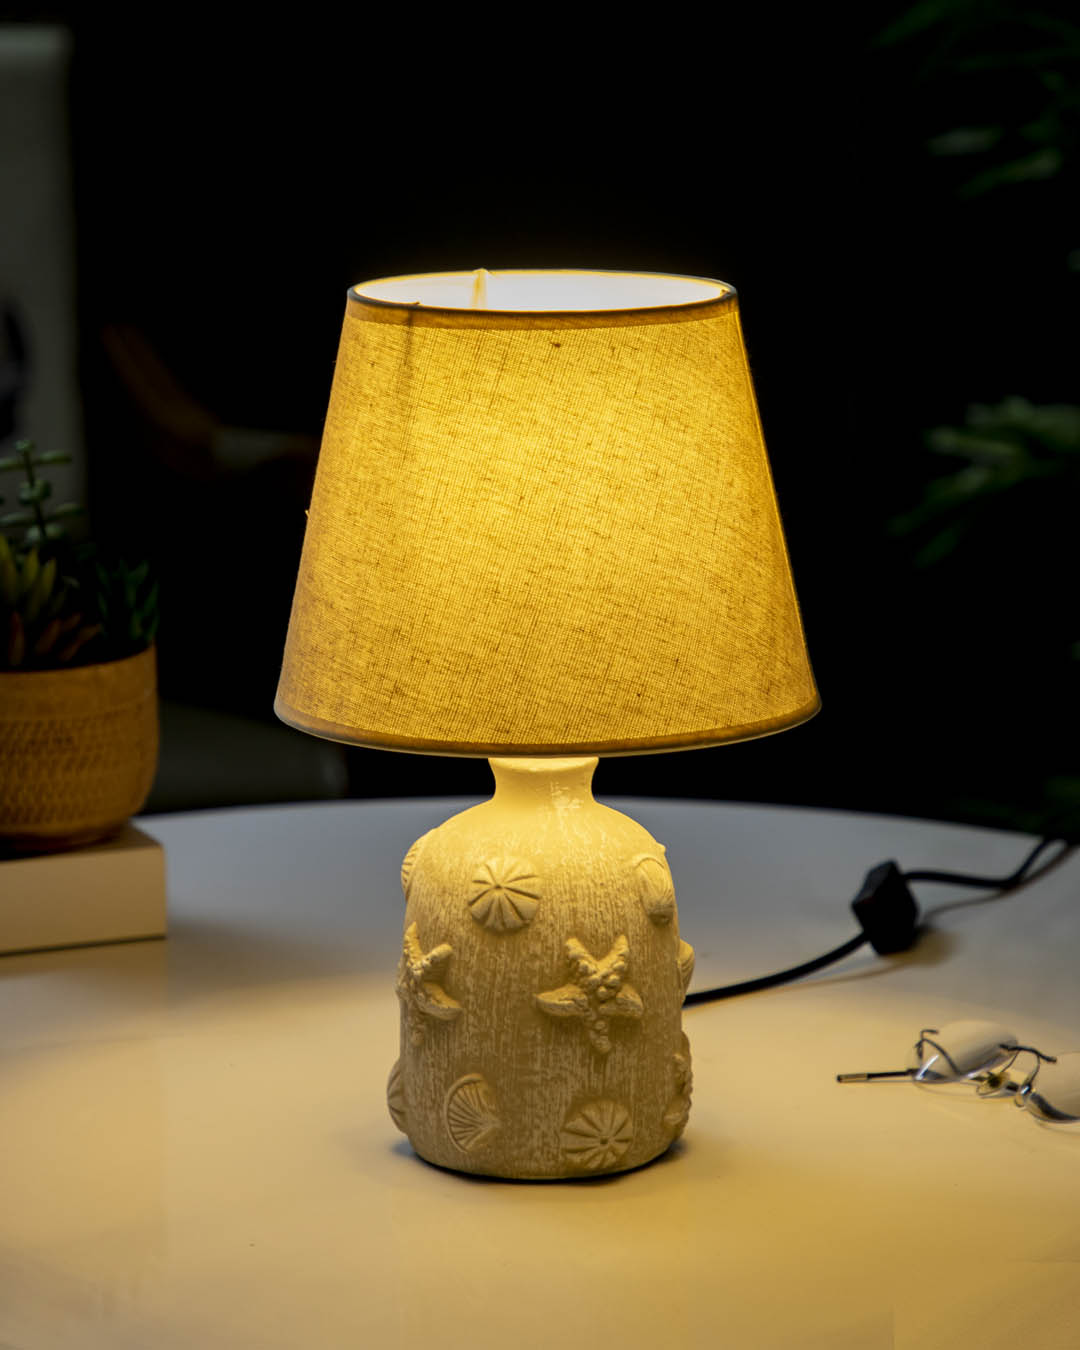 Coastal-Inspired Table Lamp - I